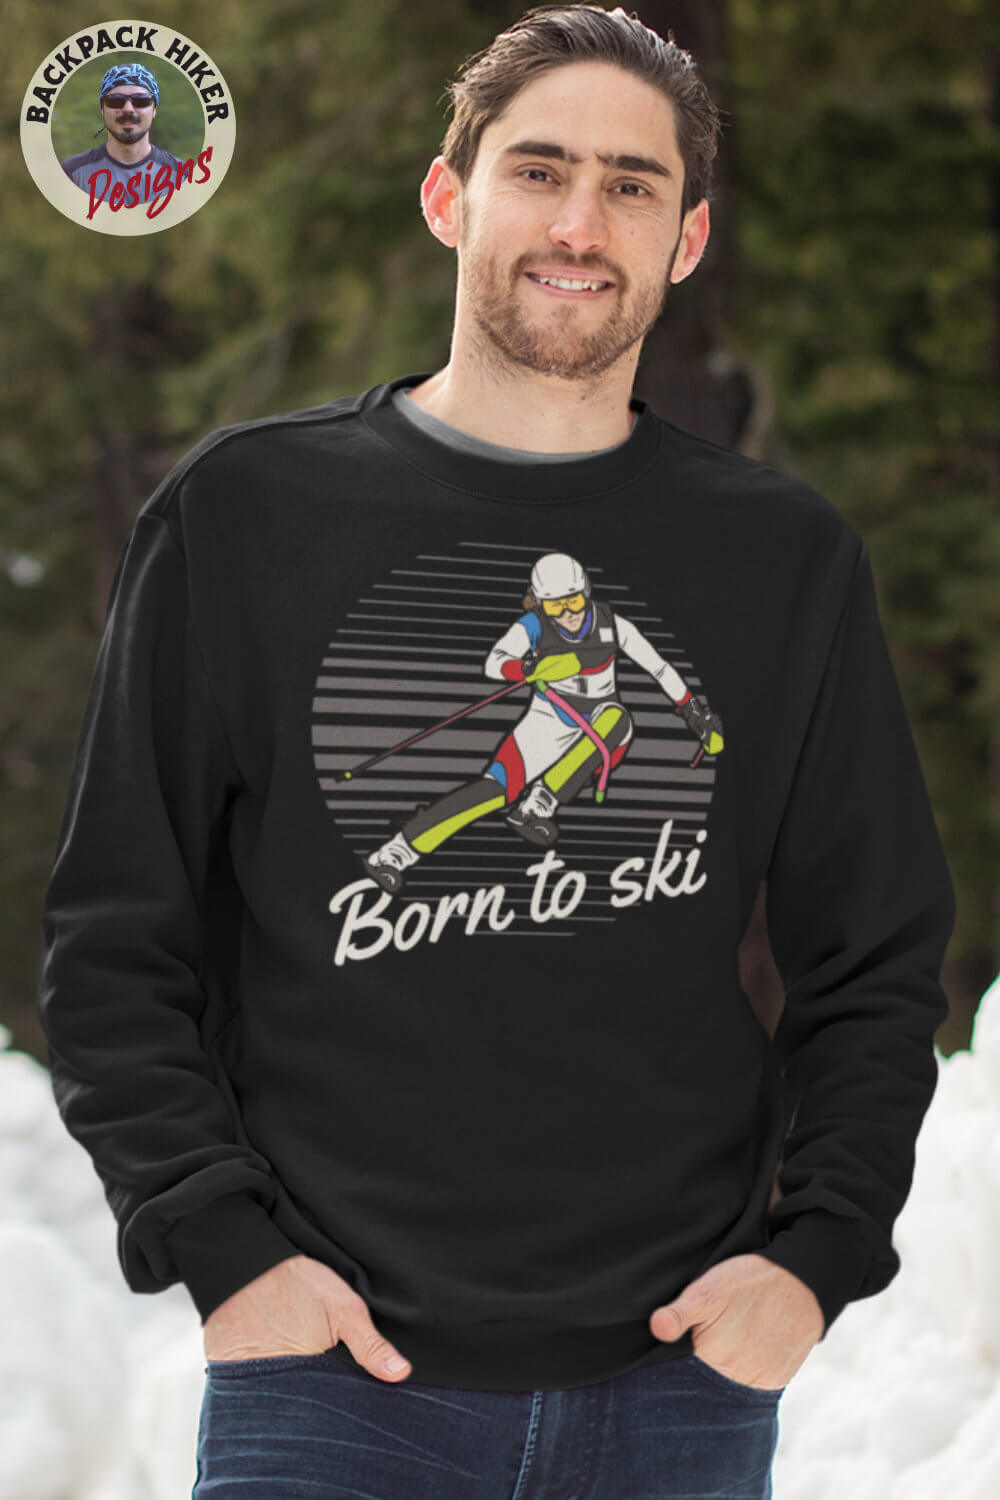 Born to ski v2